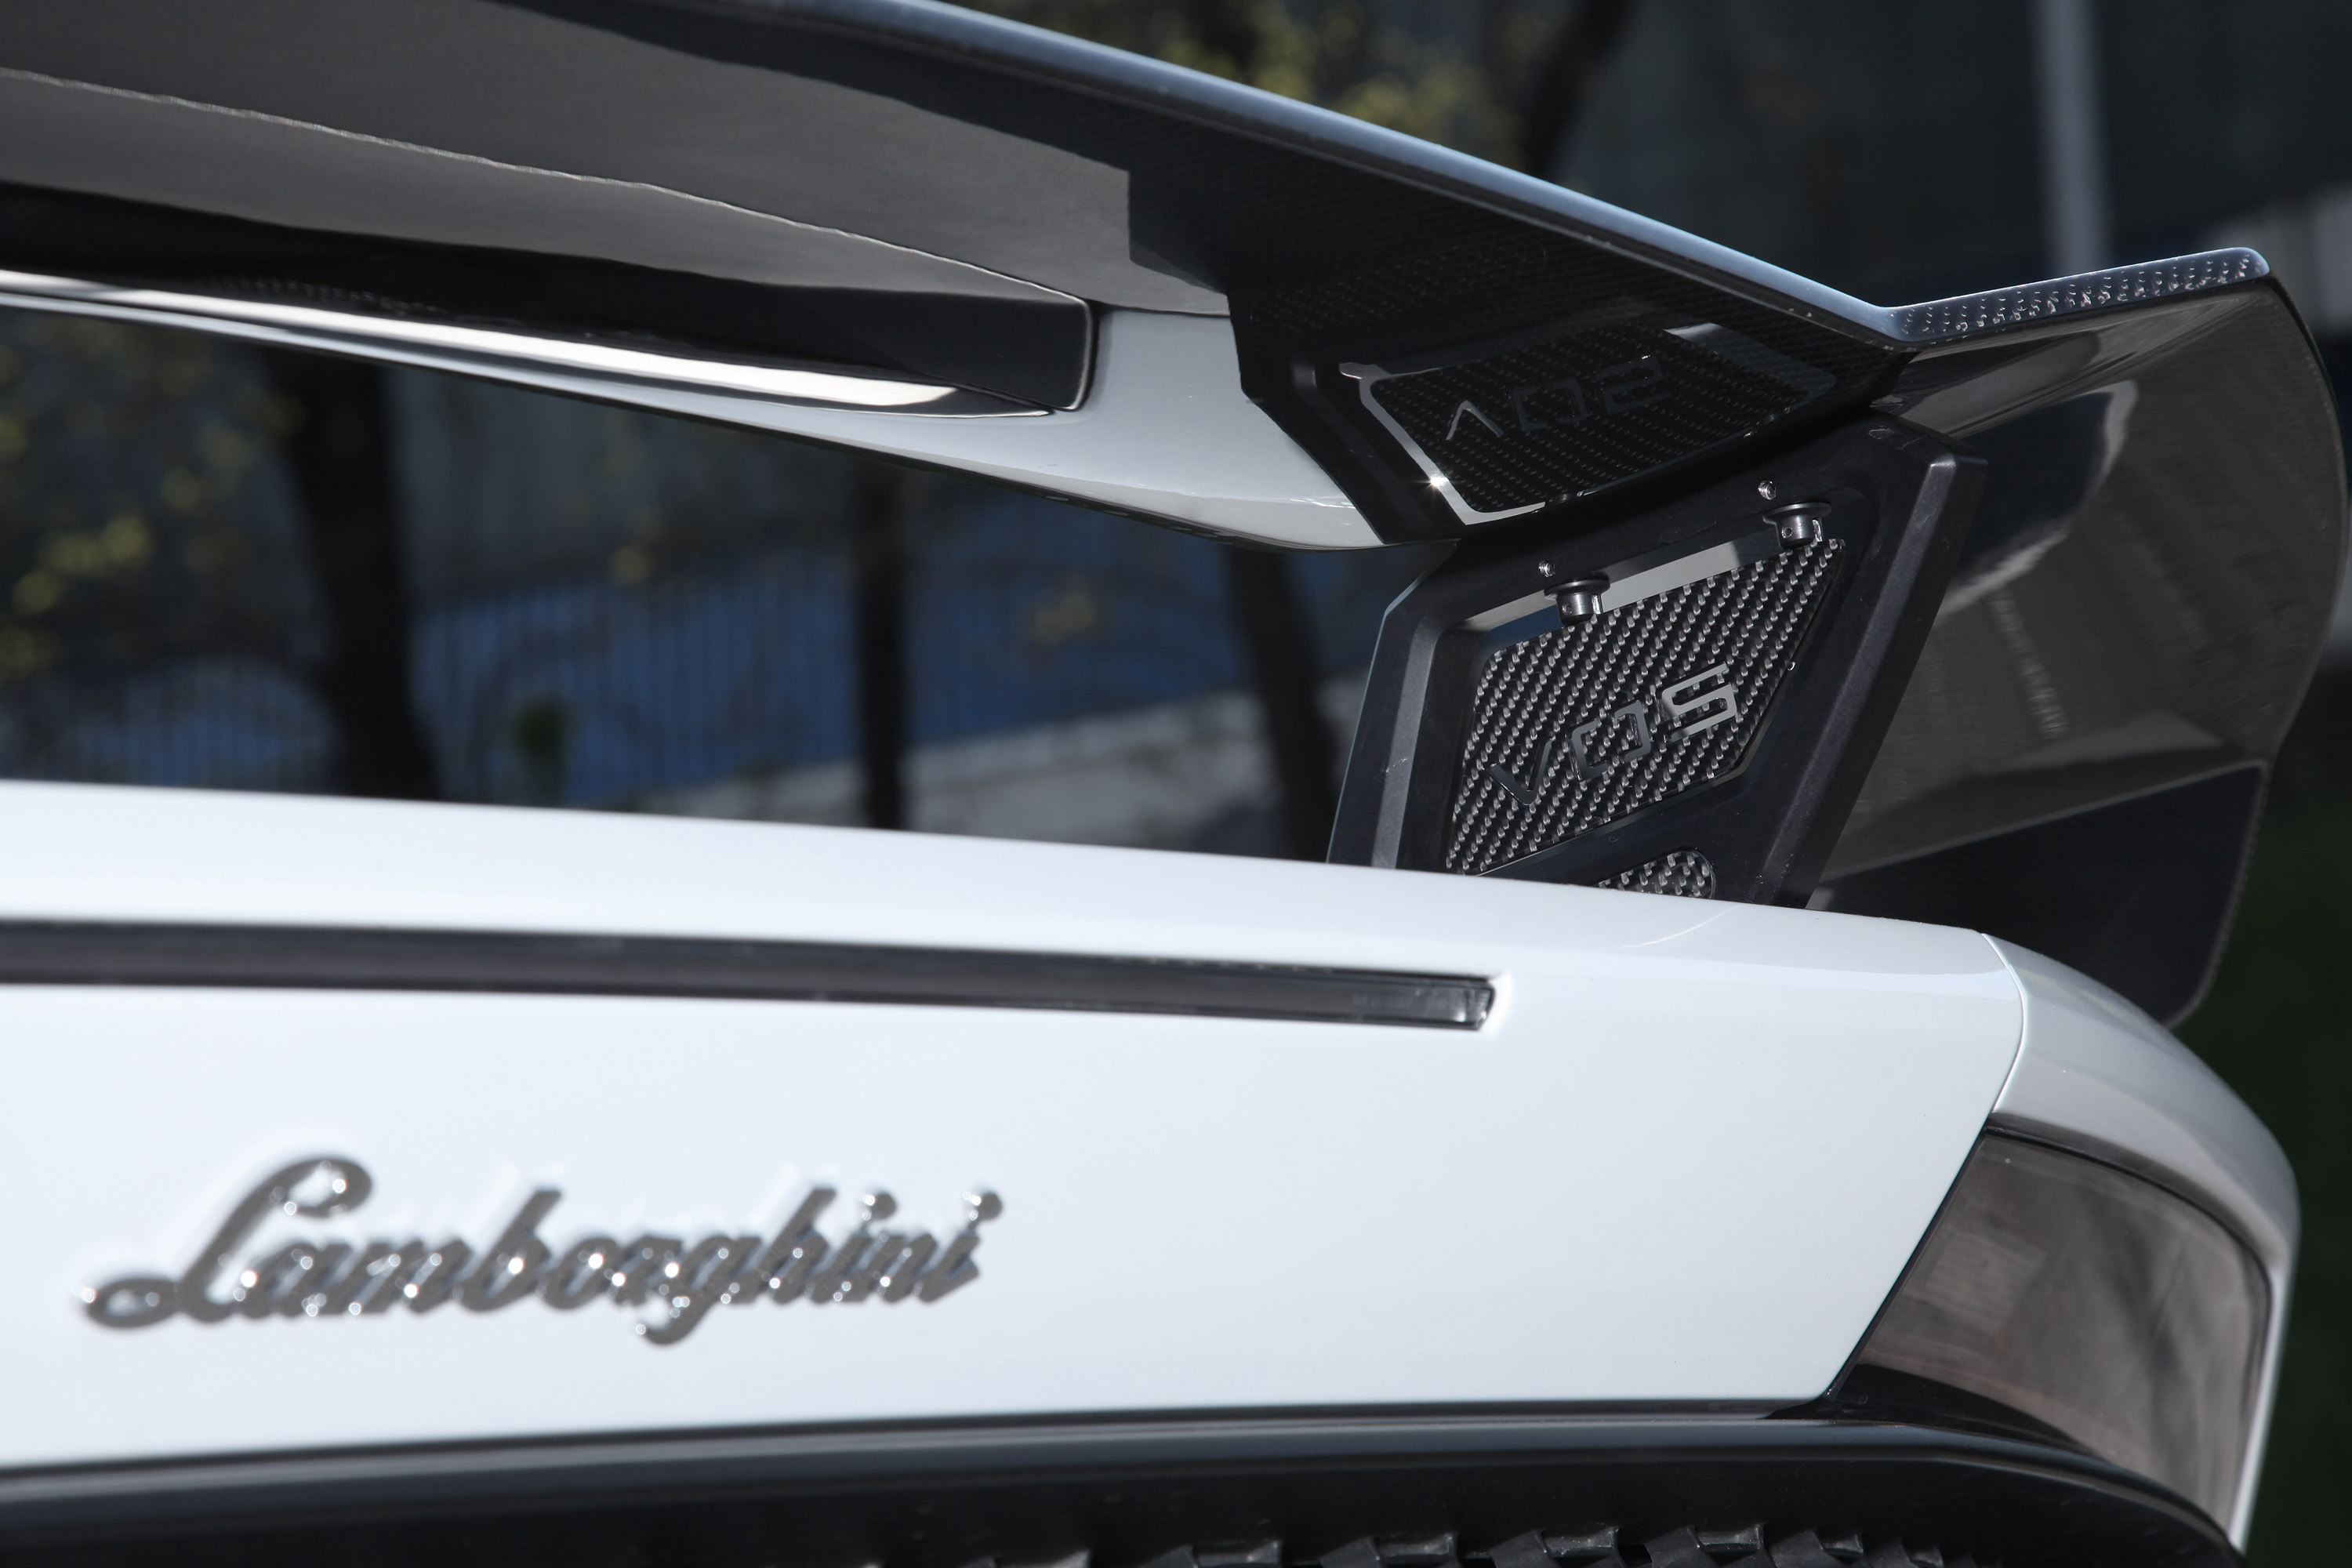 VOS Performance Lamborghini Huracan Final Edition